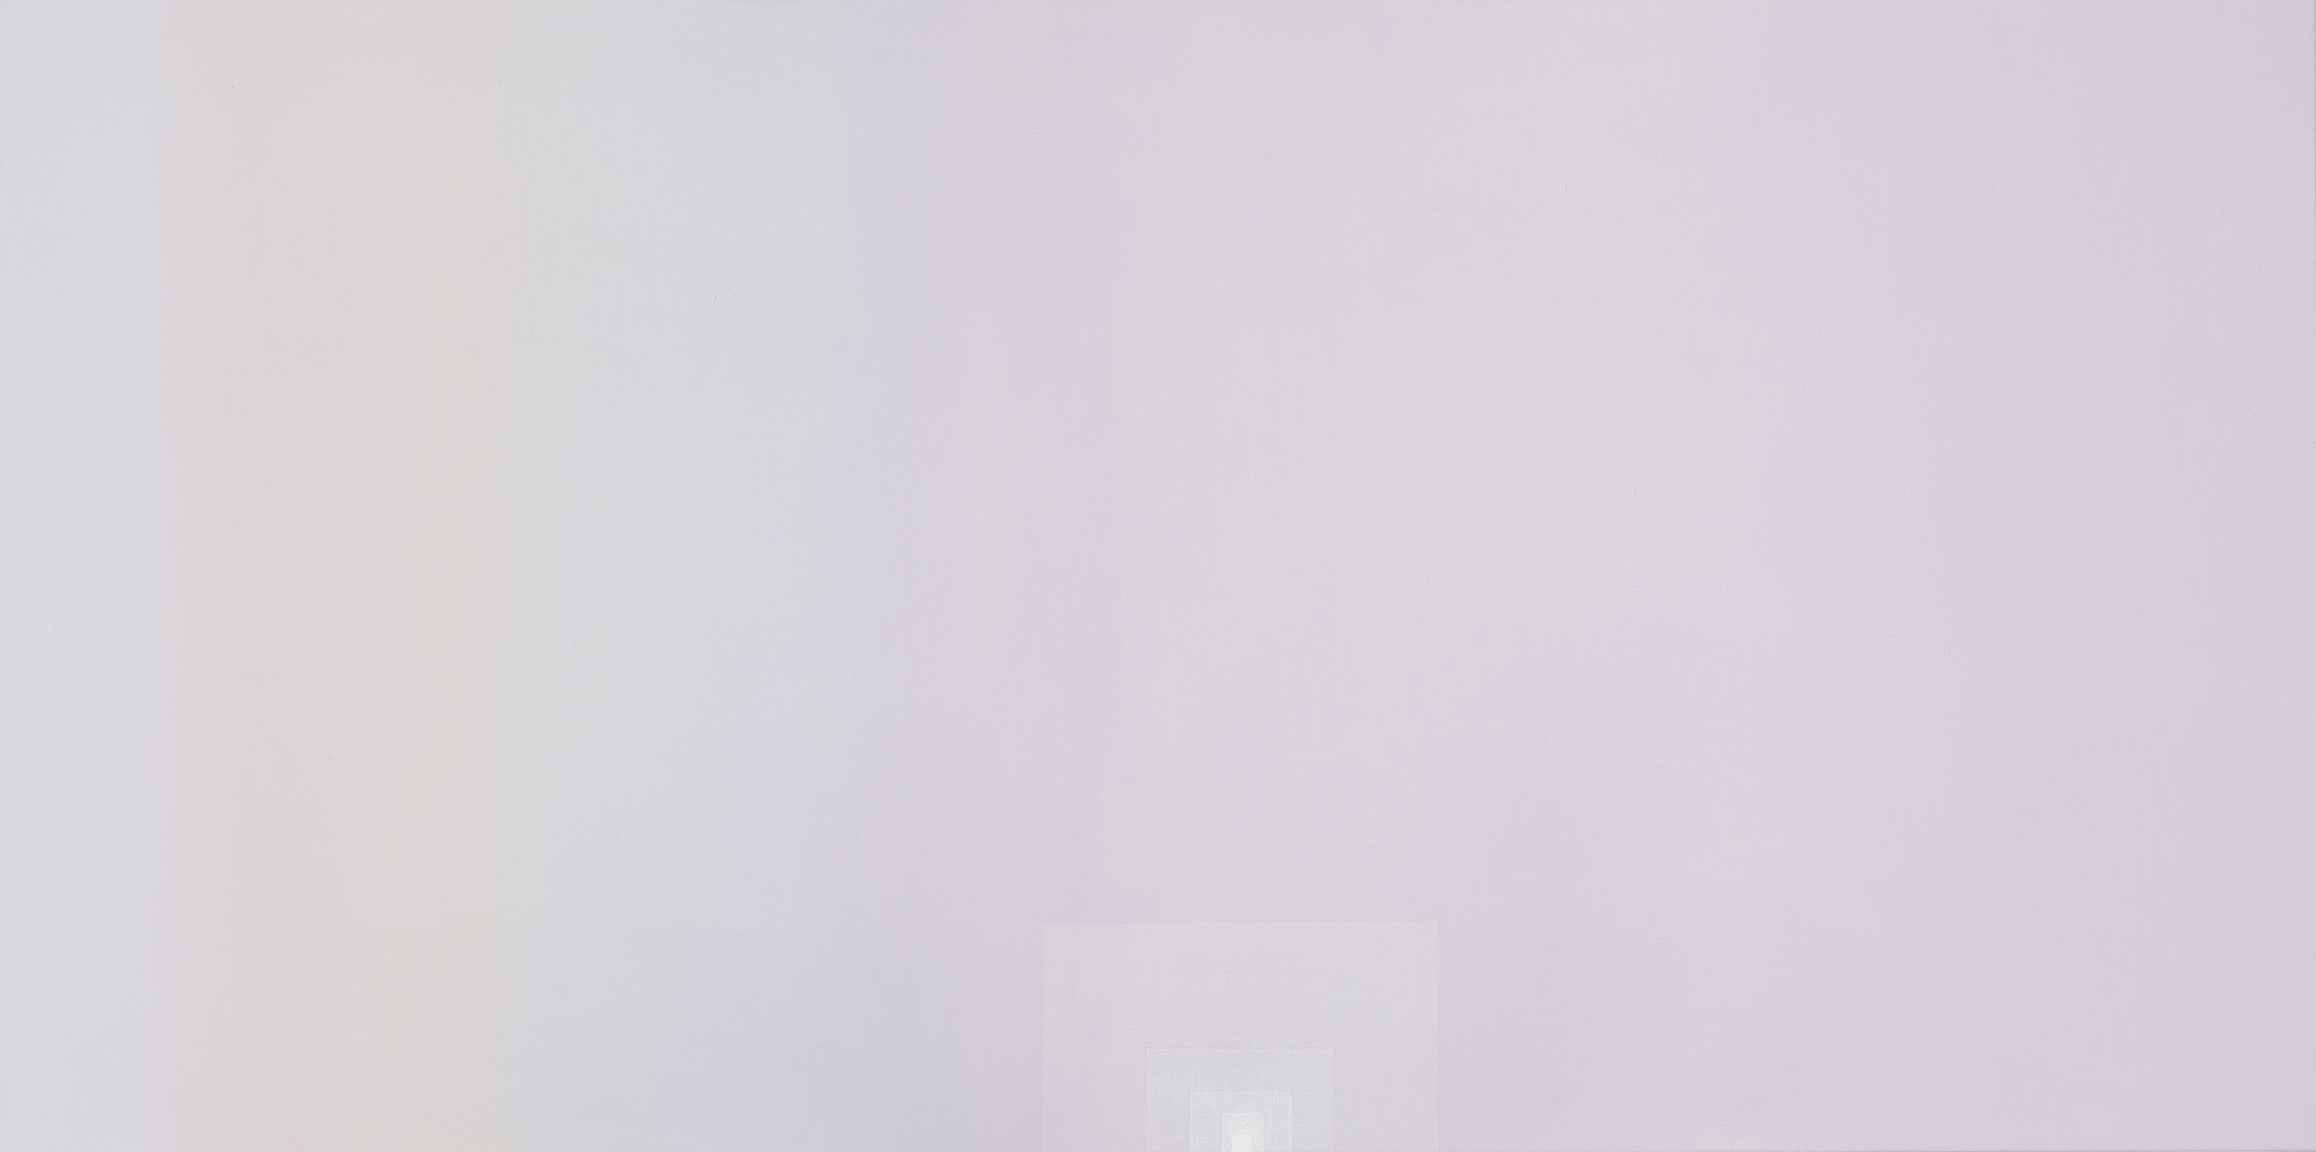 Rosslynd Piggott, <em>Prism veil and multiplied window</em>, 2021-23, oil on linen 50 x 100 cm. Courtesy of the artist and Sutton Gallery, Melbourne. Photo: Christian Capurro